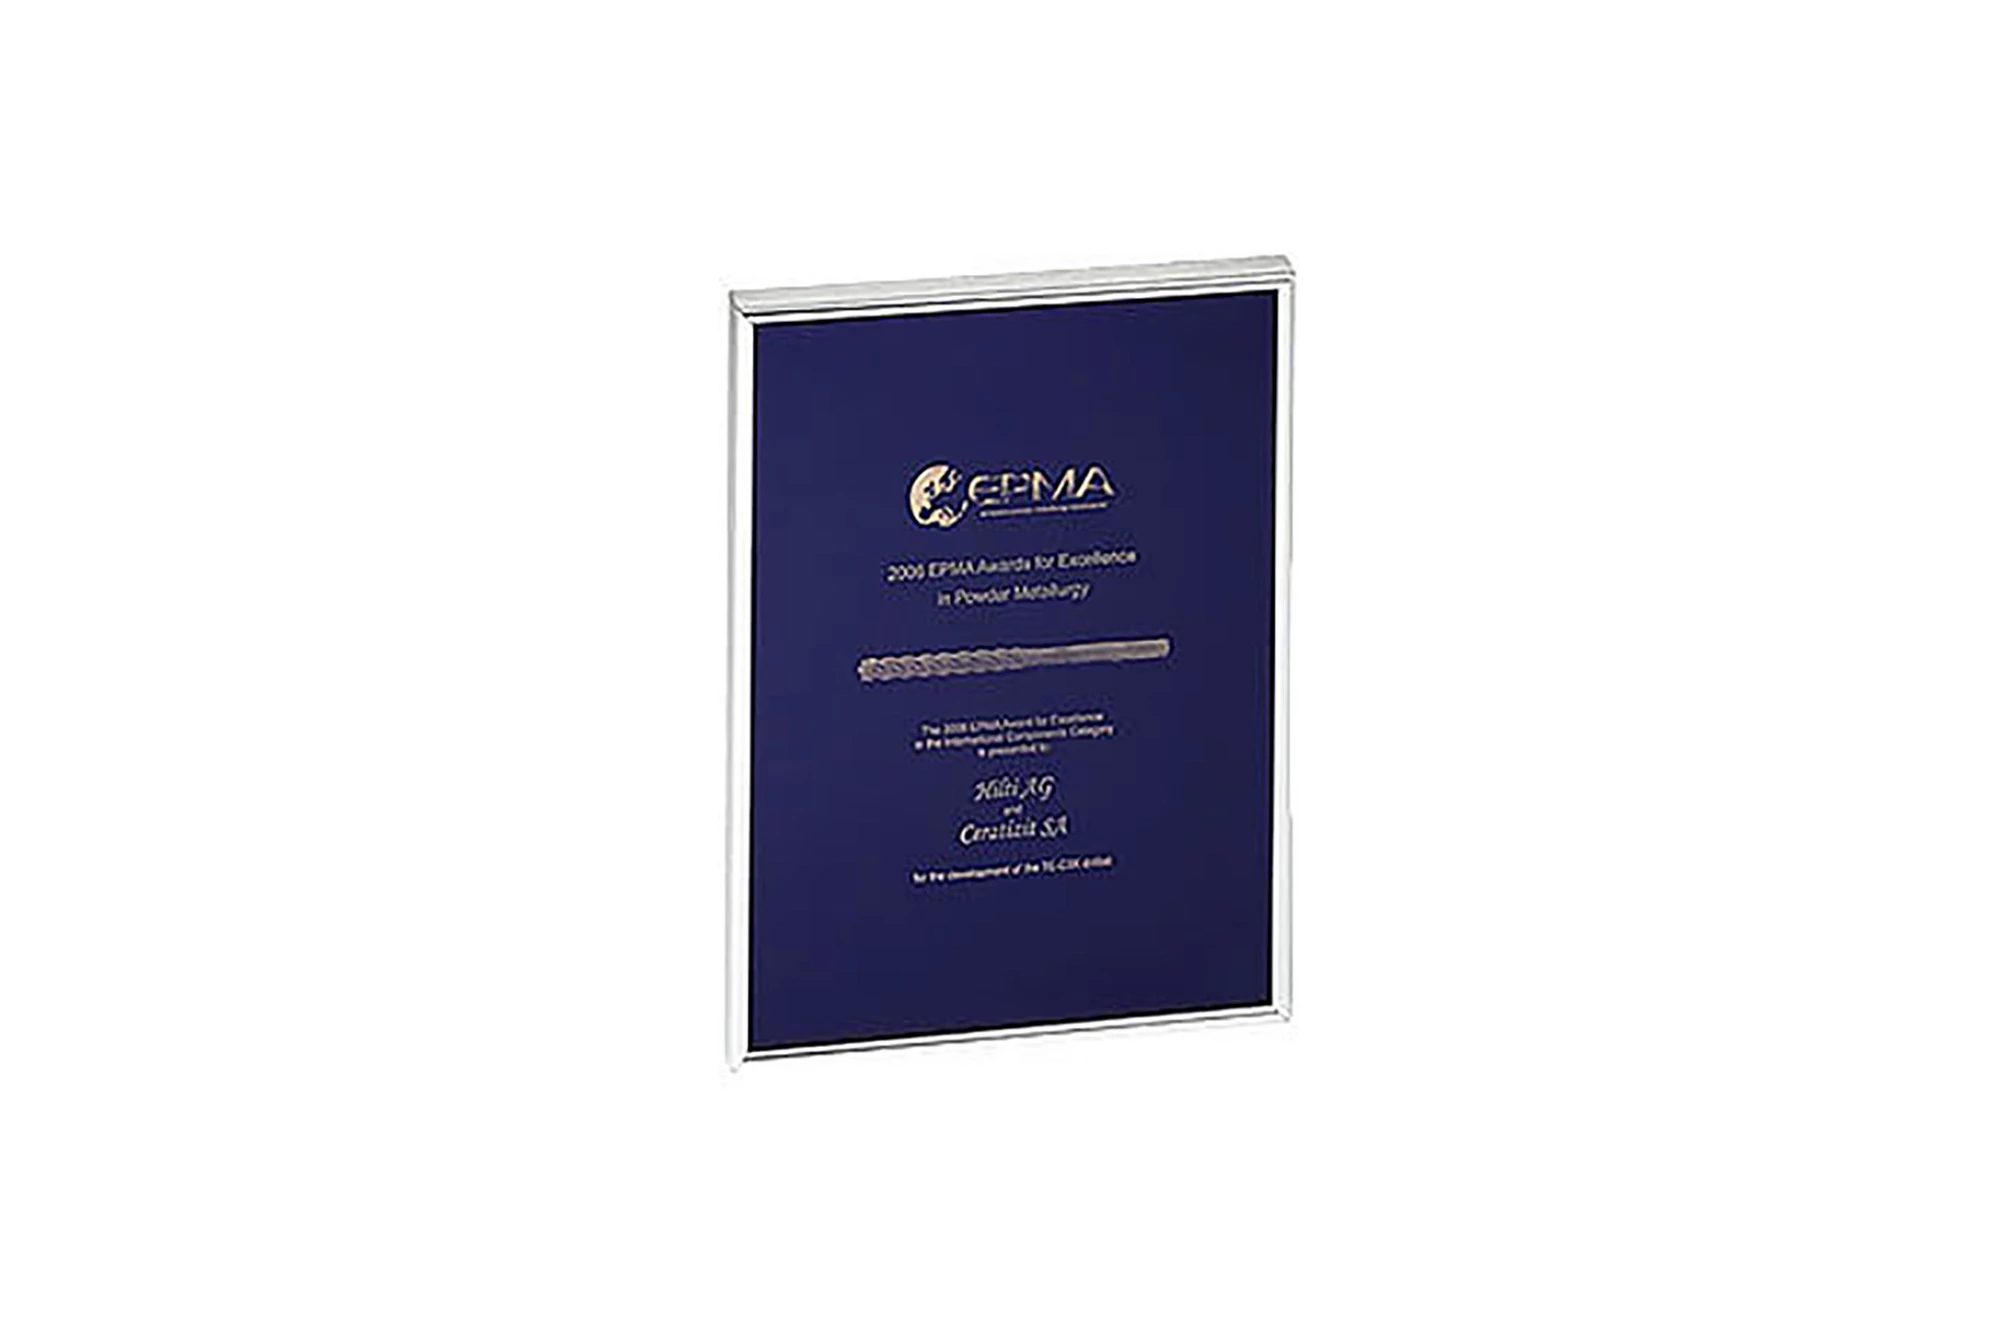 EPMA Award for Excellence in Powder Metallurgy